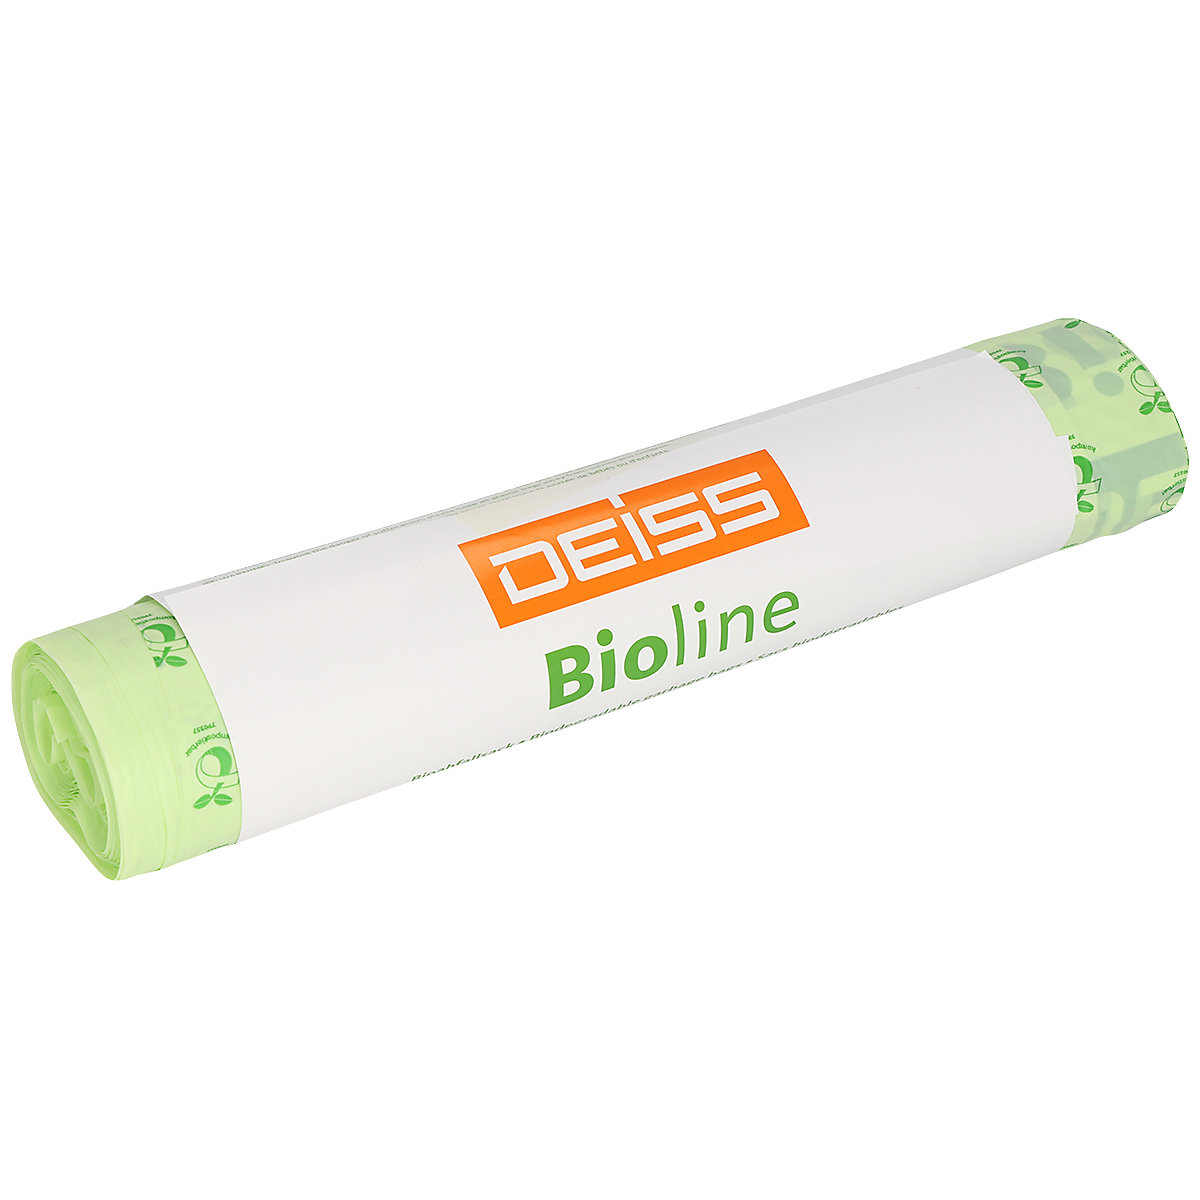 Bioline hulladékgyűjtő zsákok, ecovio® – Deiss